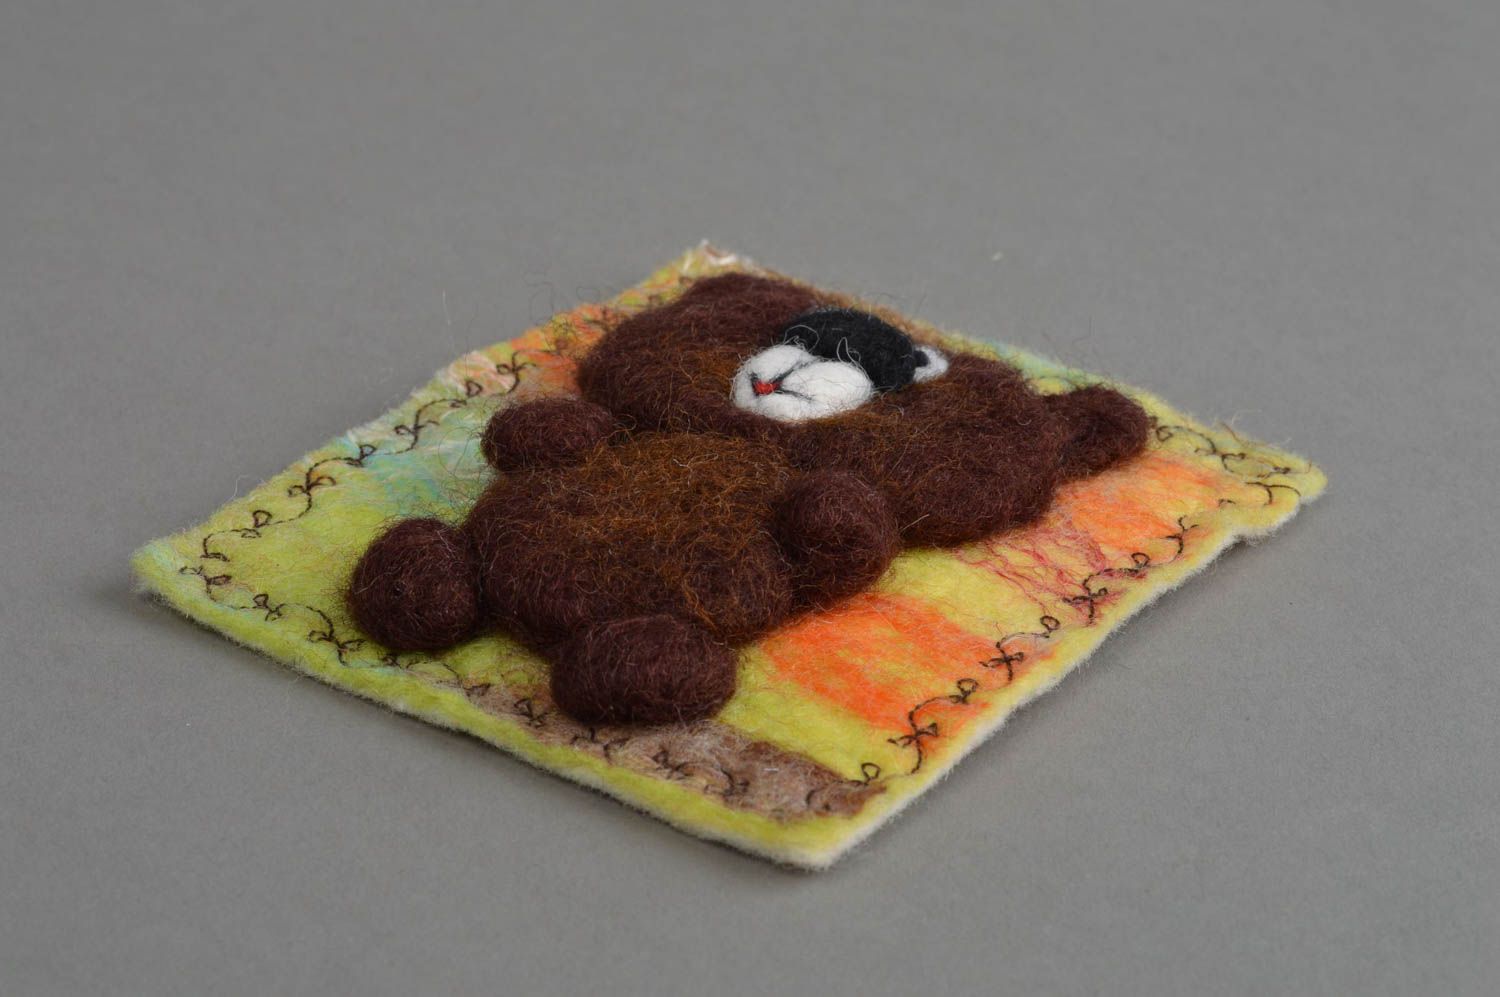 Handmade soft fridge magnet toy for children interior decor ideas for kitchen photo 2